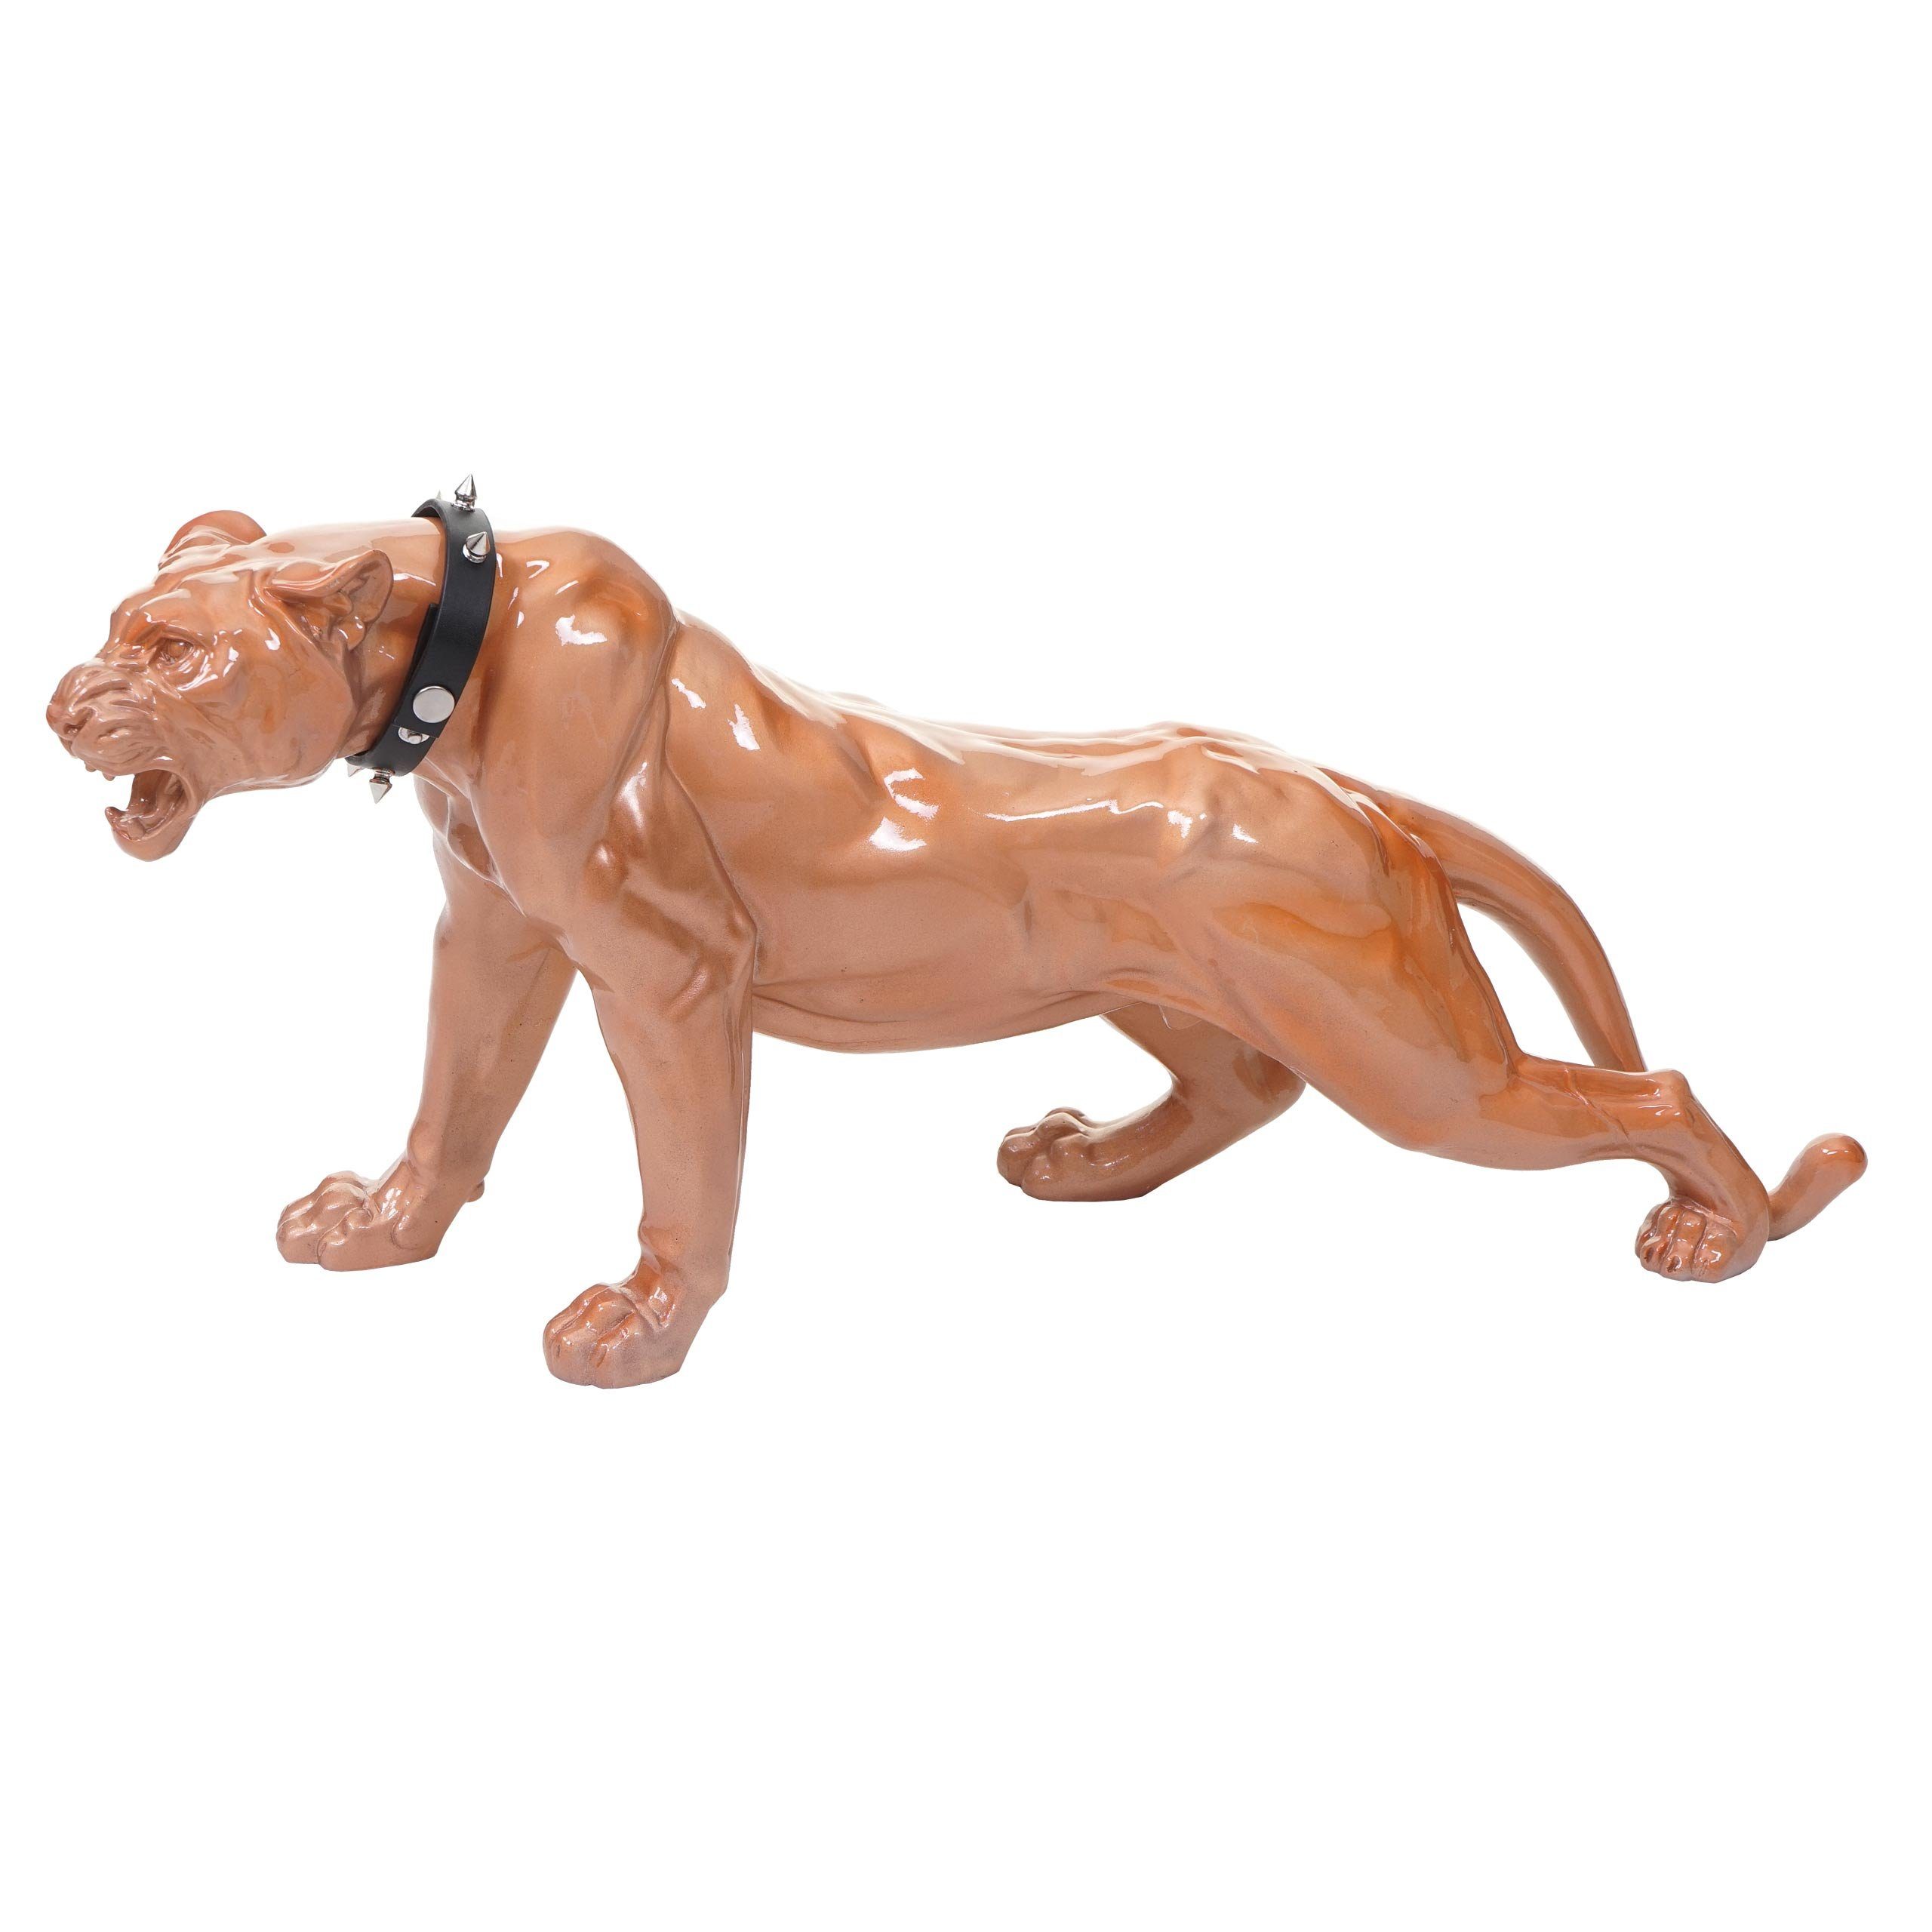 MCW Tierfigur Panther, Indoor/Outdoor-geeignet, Witterungsbeständig, Frostbeständig bis -10° C, Inkl. Halsband